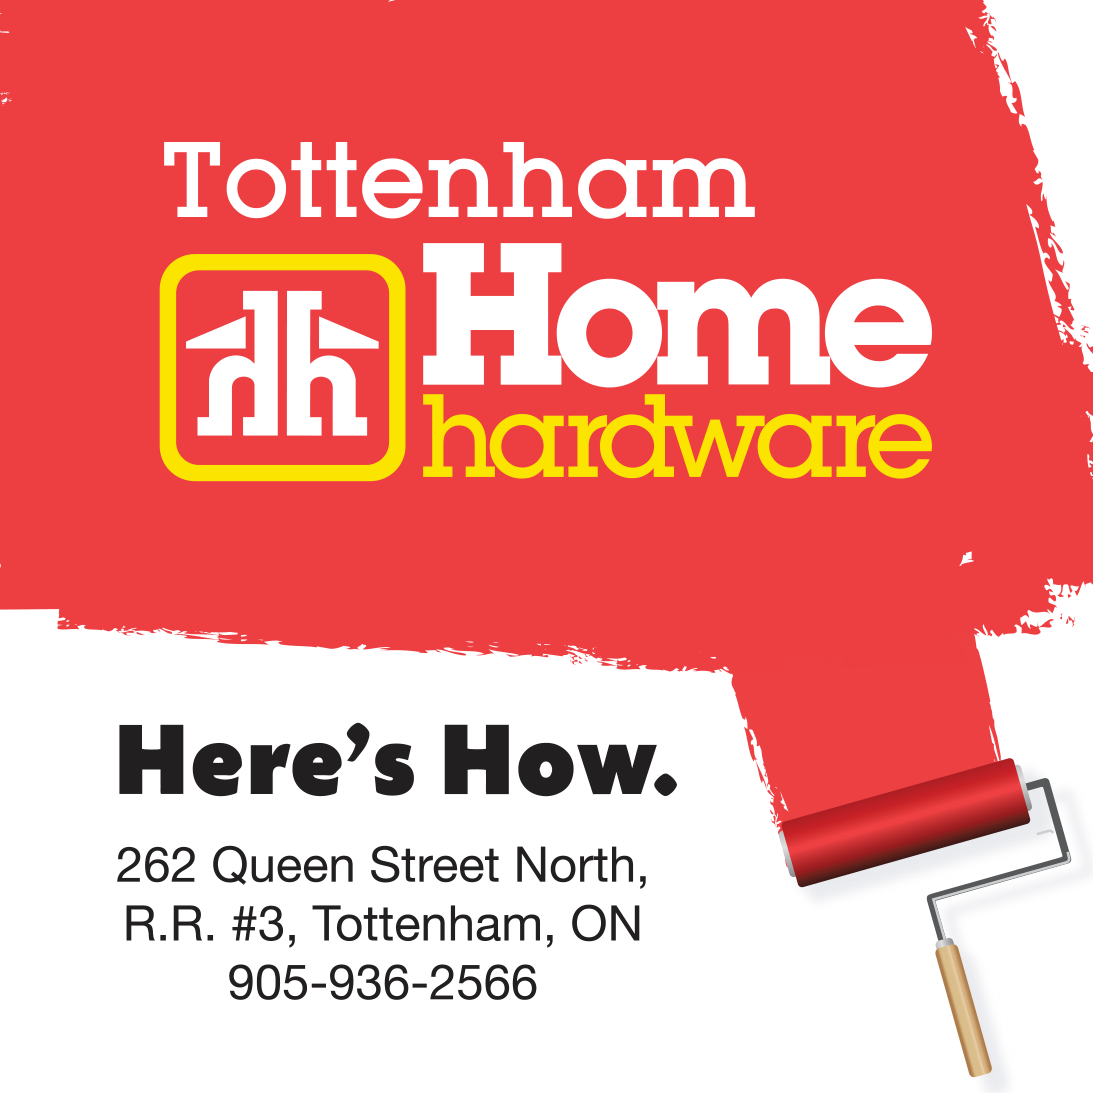 Tottenham Home Hardware